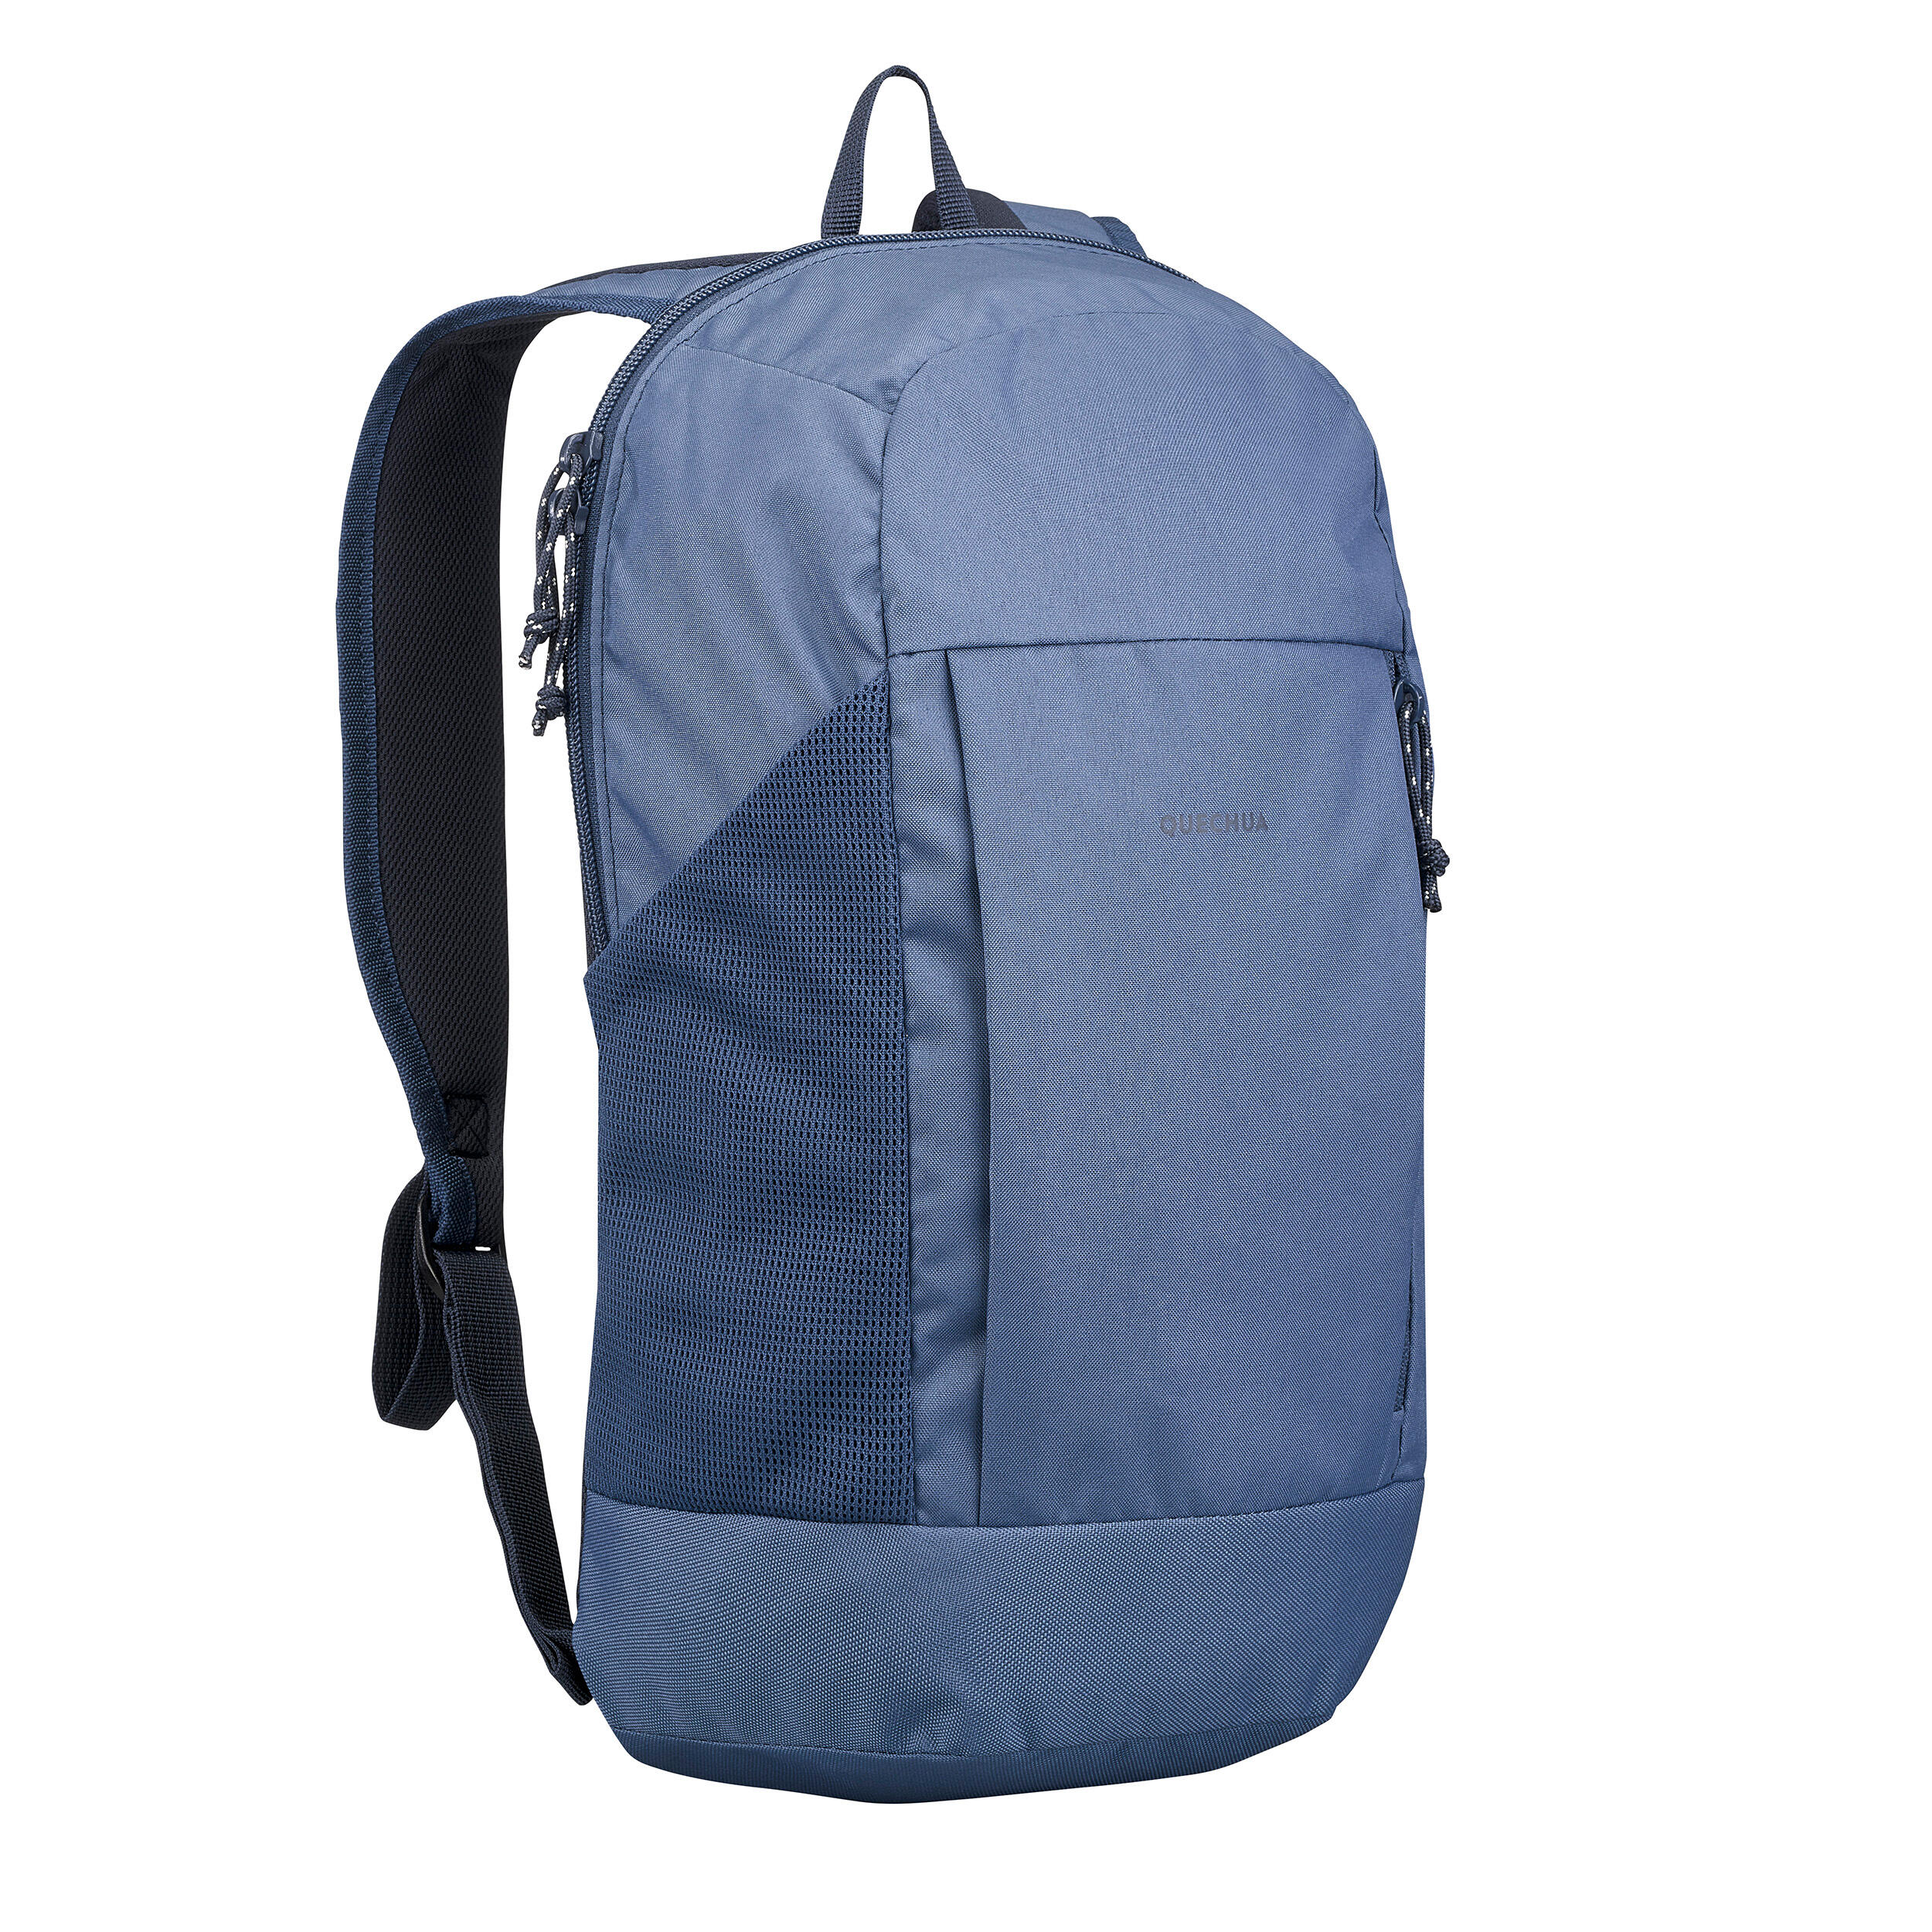 DCATHLON ARPENAZ NH100 10 L Backpack DARK BLUE/NAVY - Price in India |  Flipkart.com